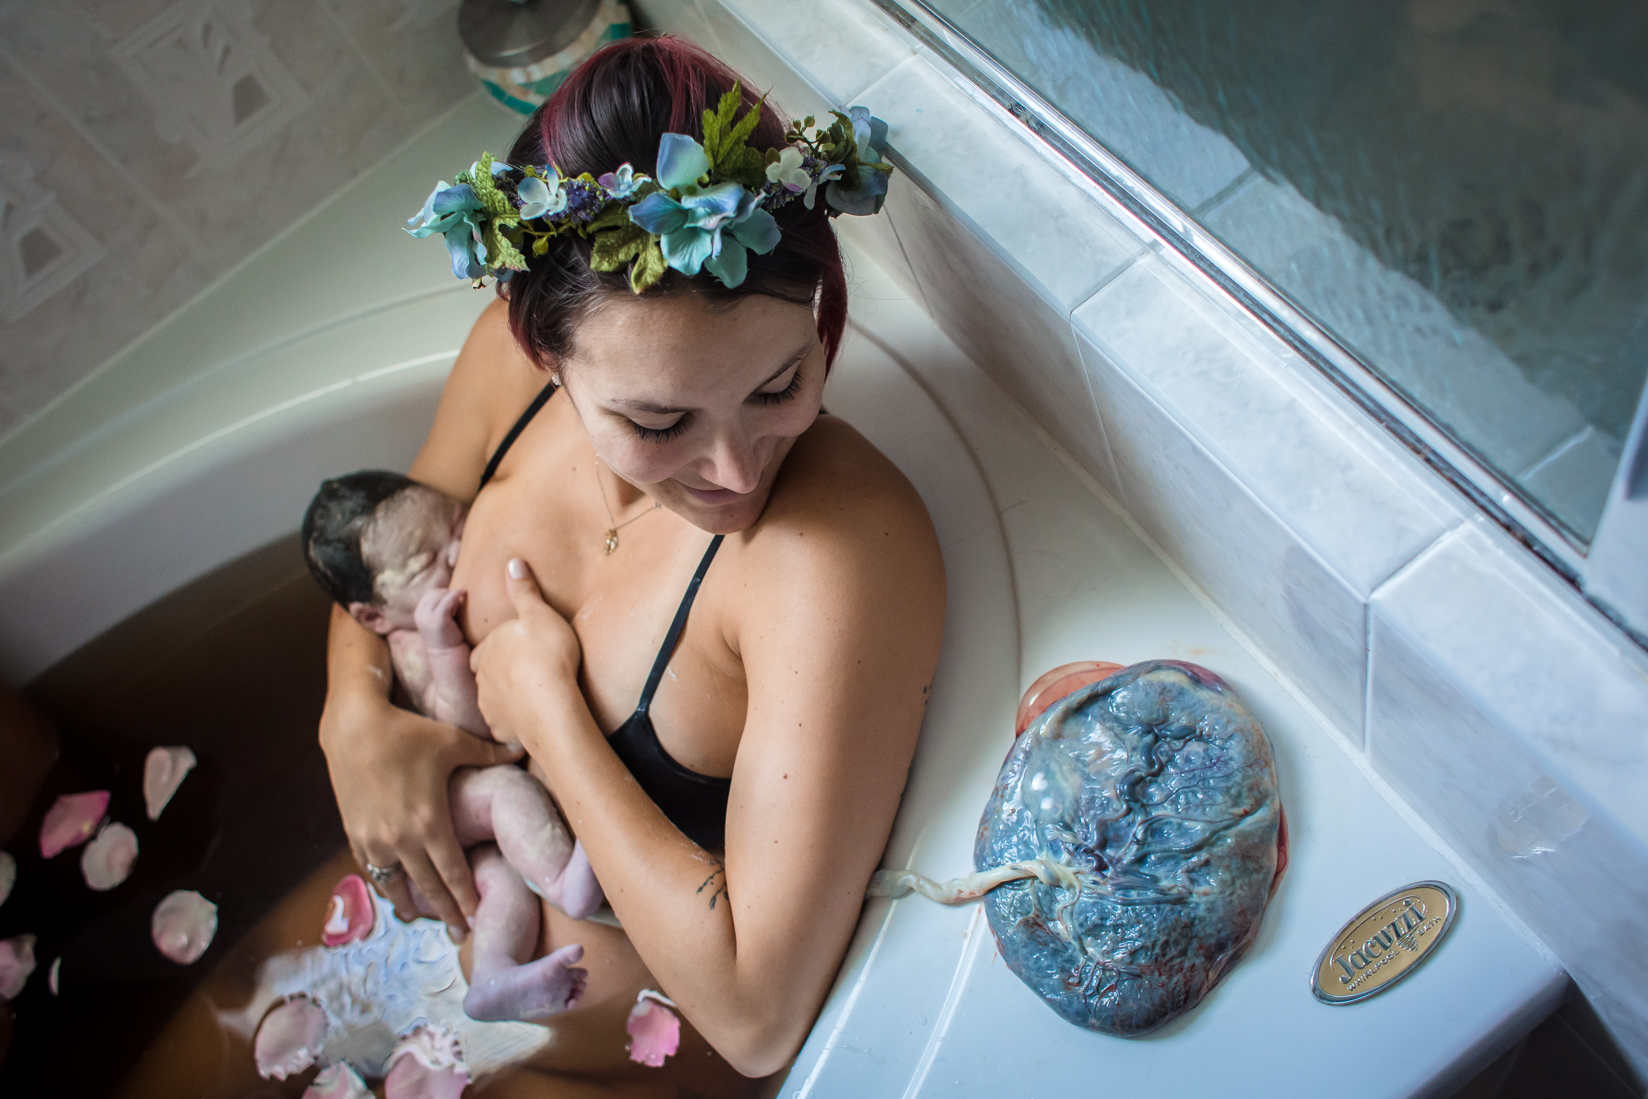 gelena-hinkley-natural-birthworks-doula-childbirth-class-birth-center-lactation-home-breastfeeding-cloth-diaper-18.jpg